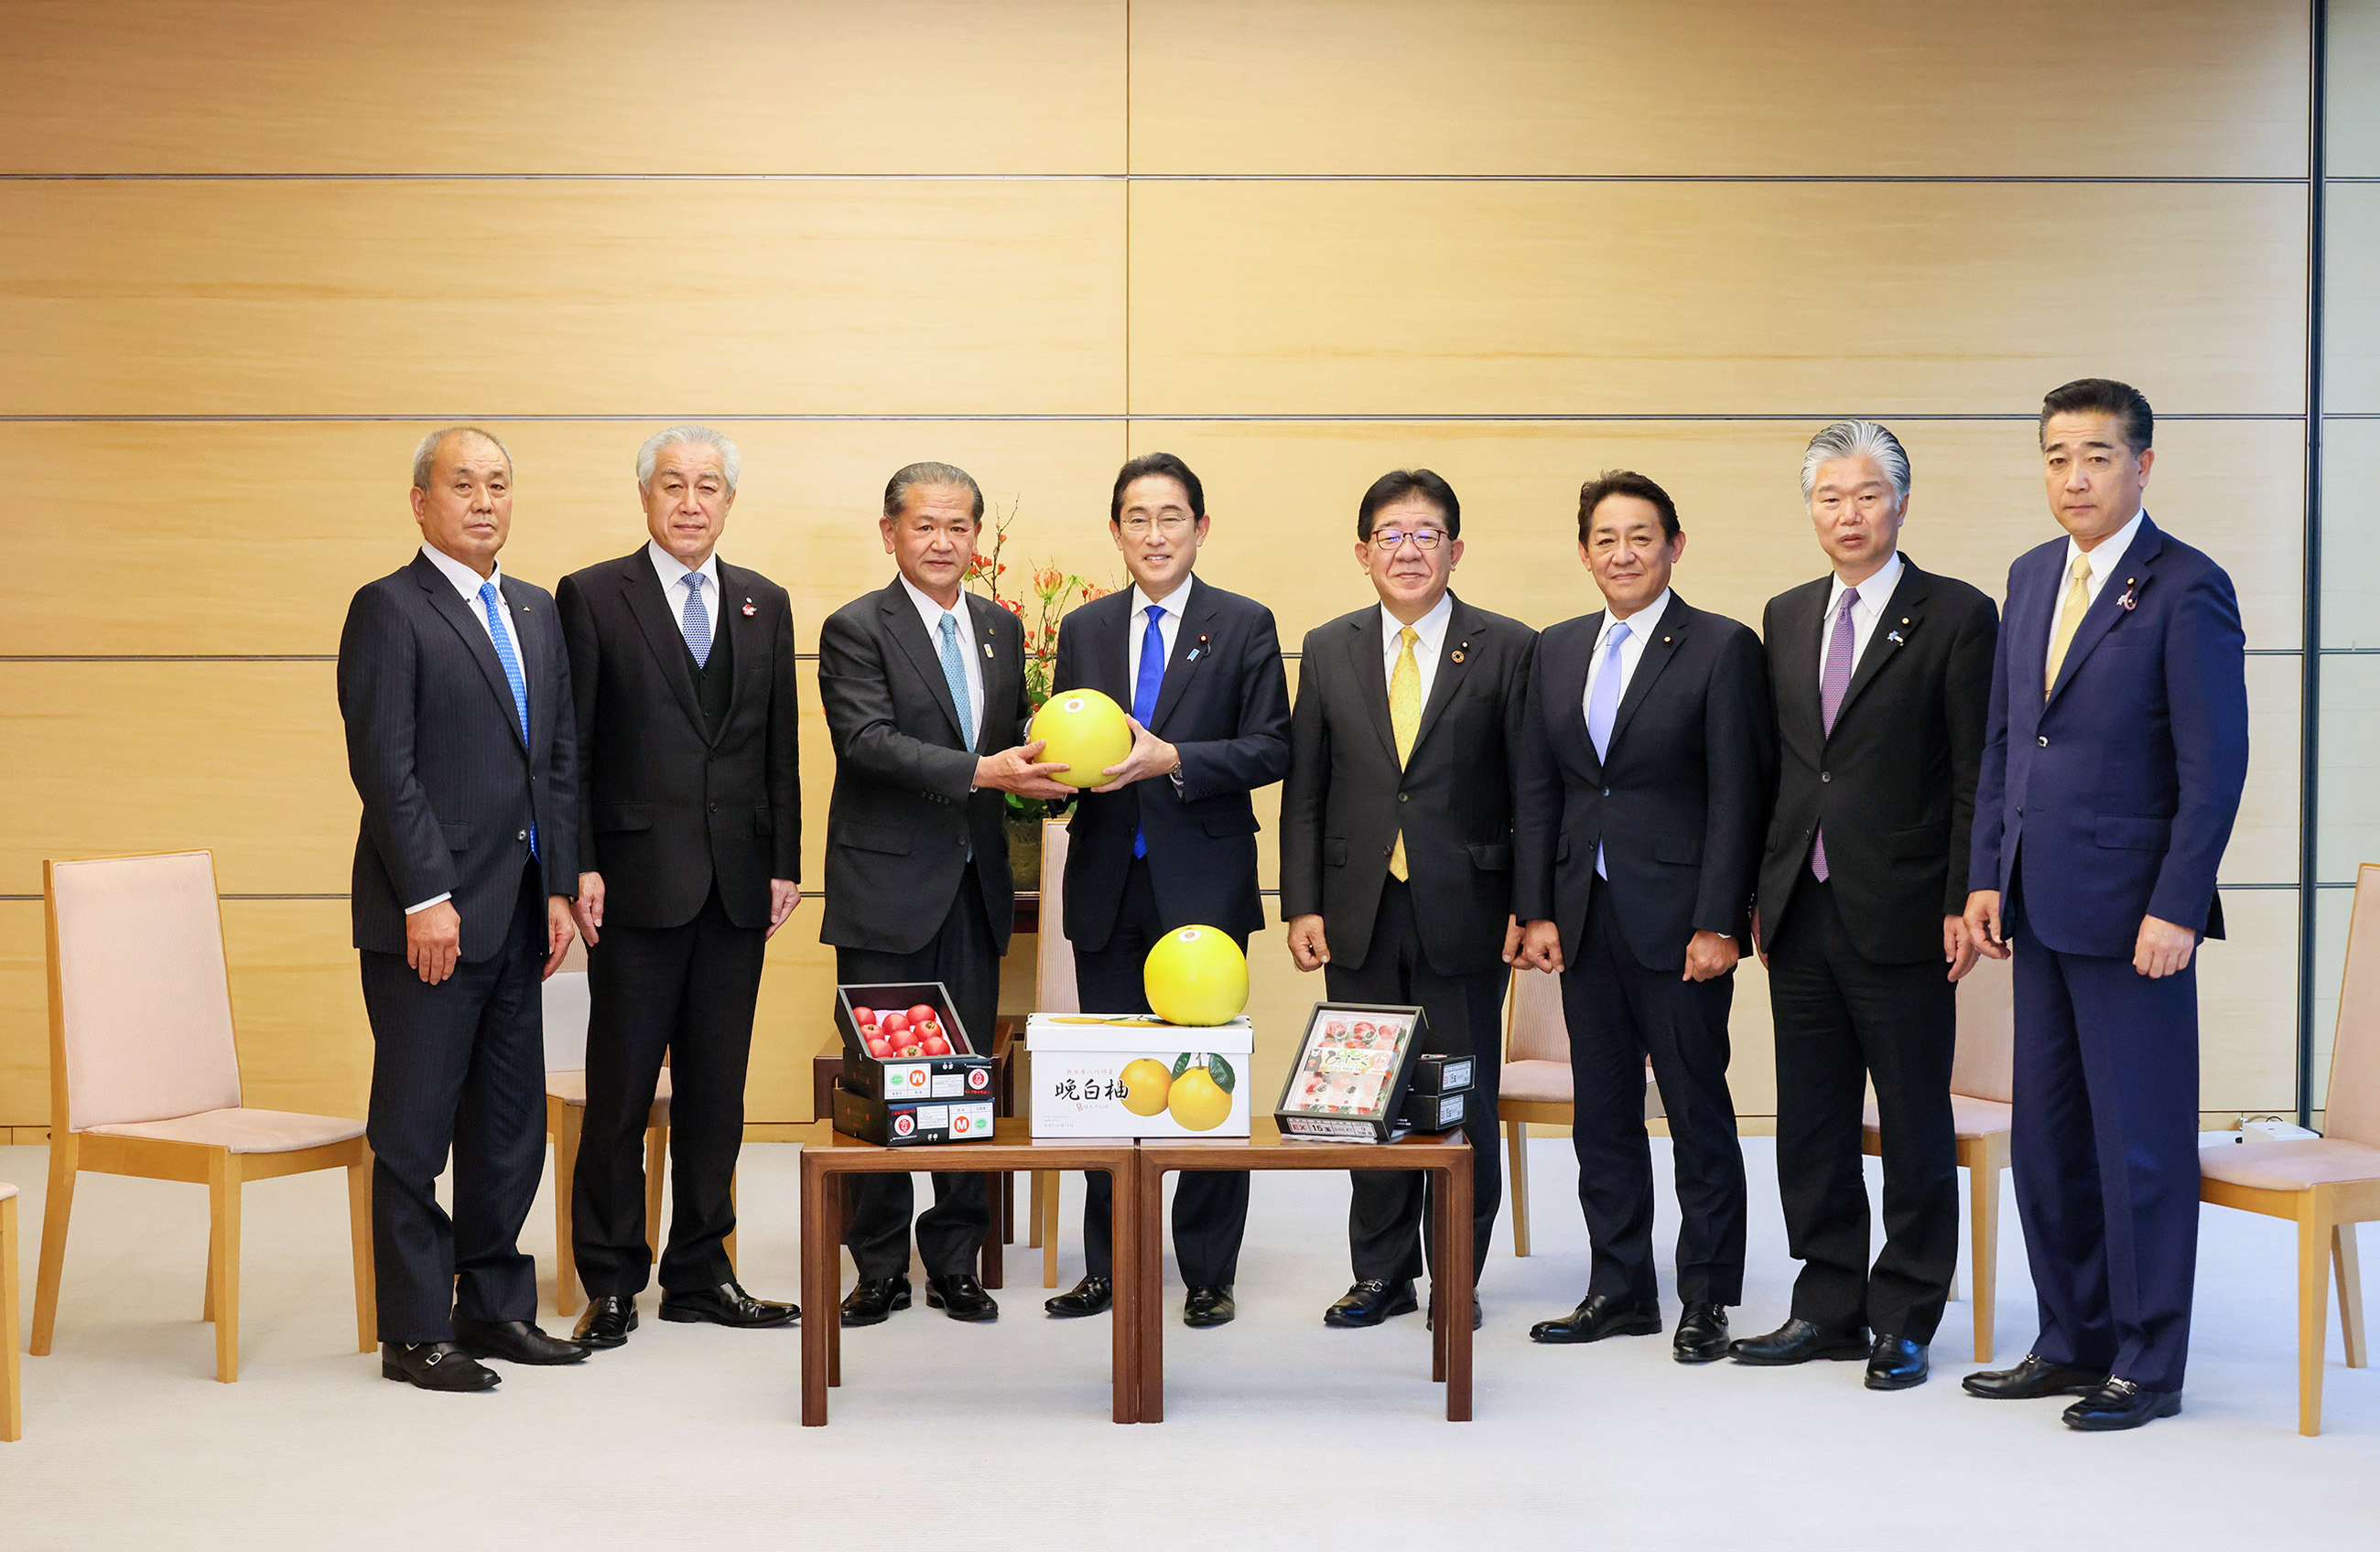 Prime Minister Kishida receiving gifts (1)